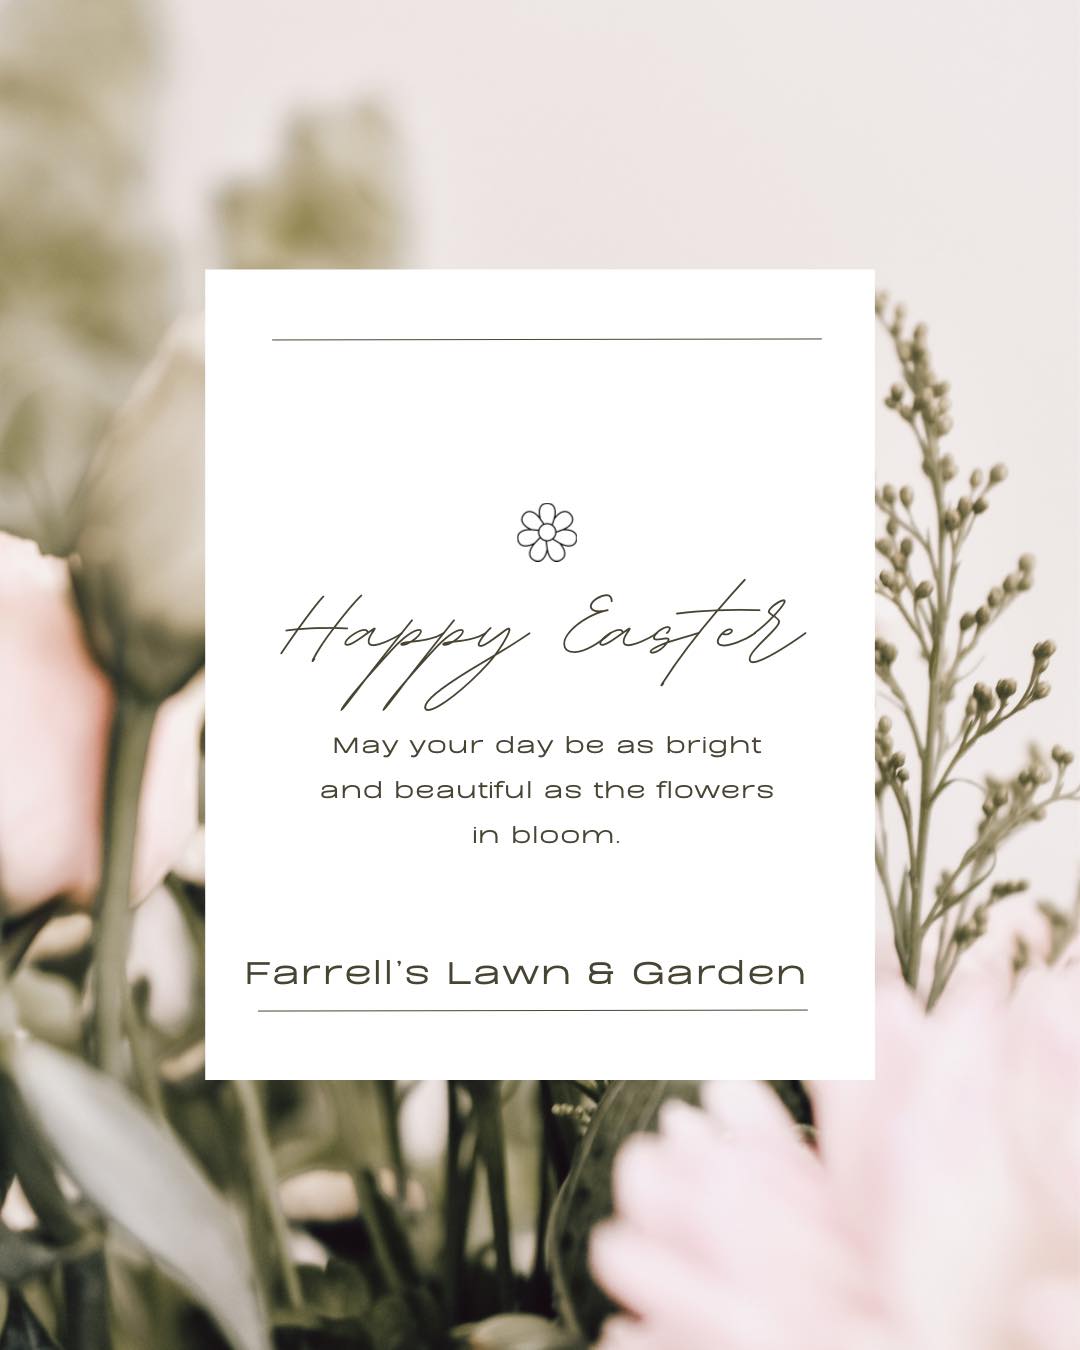 Farrell's Lawn & Garden Center 11755 Co Rd D, Bryan Ohio 43506